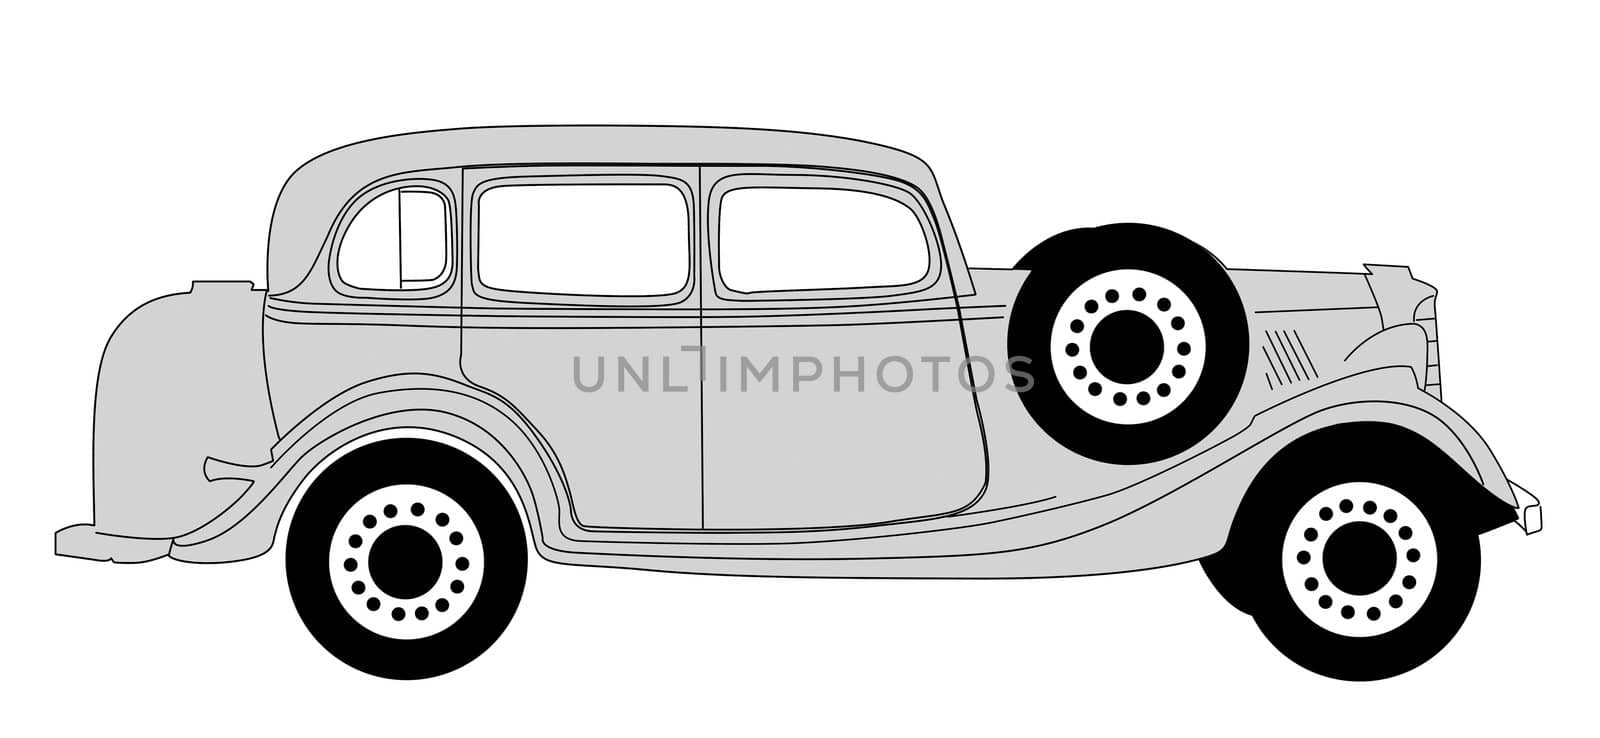 retro car on white background, vector illustration